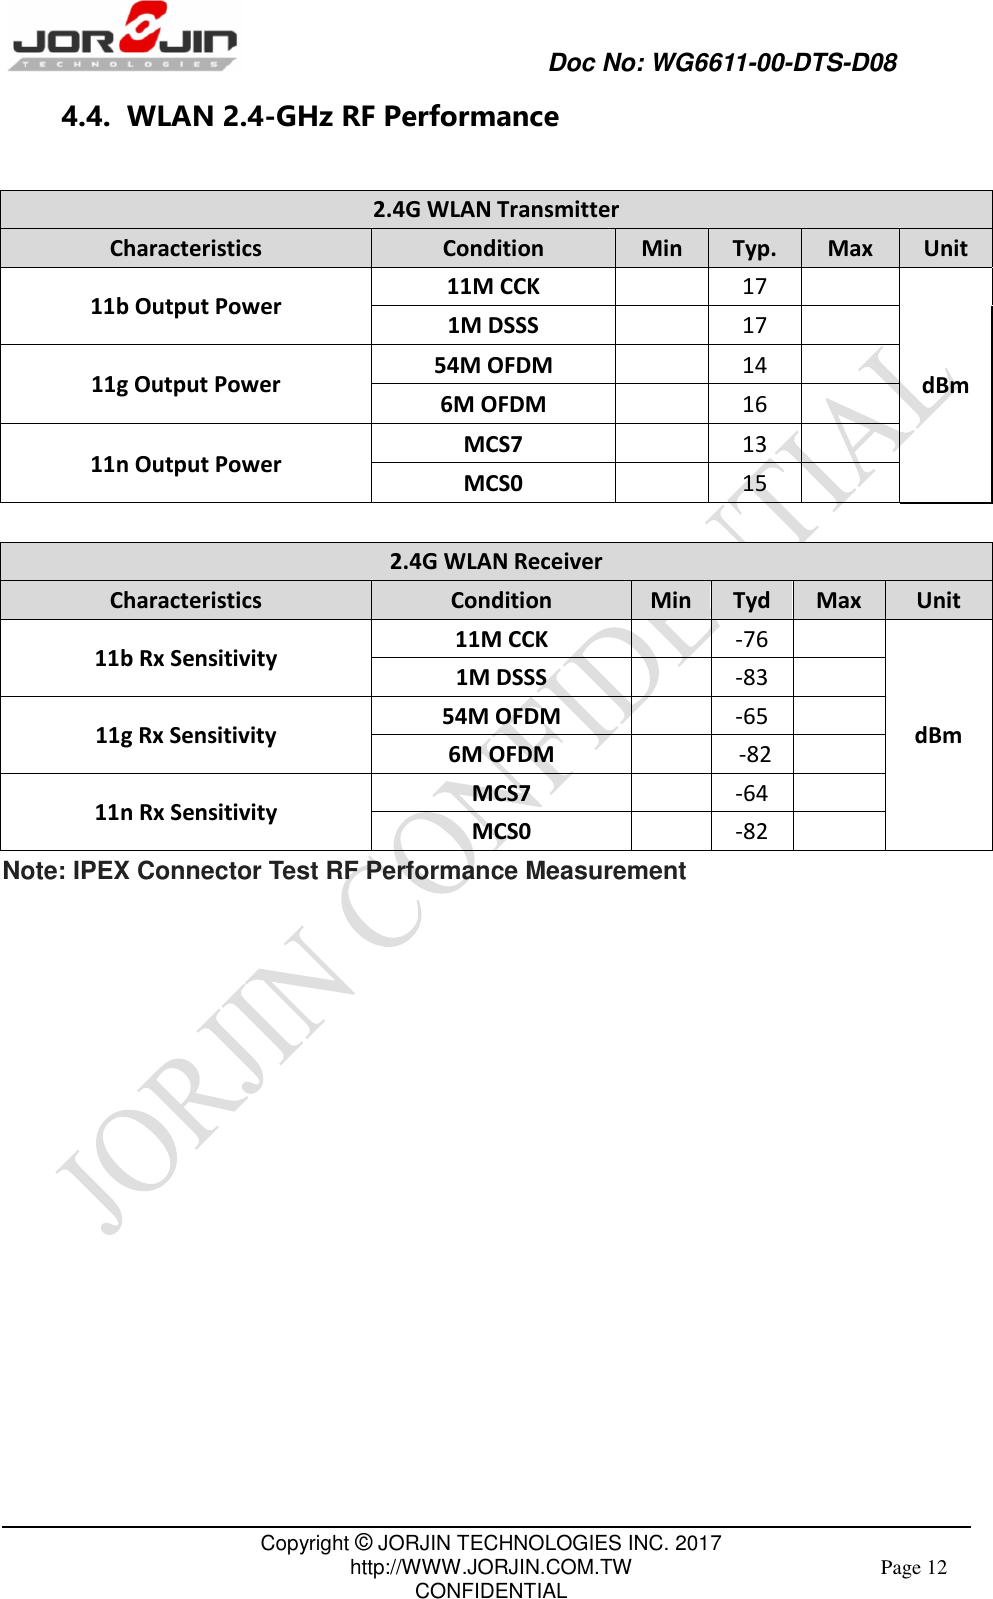             Doc No: WG6611-00-DTS-D08                                                                                               Copyright © JORJIN TECHNOLOGIES INC. 2017 http://WWW.JORJIN.COM.TW CONFIDENTIAL Page 12 4.4.  WLAN 2.4-GHz RF Performance  2.4G WLAN Transmitter Characteristics Condition Min Typ. Max Unit 11b Output Power 11M CCK  17  dBm 1M DSSS  17  11g Output Power 54M OFDM  14  6M OFDM  16  11n Output Power MCS7    13  MCS0  15   2.4G WLAN Receiver Characteristics Condition Min Tyd Max Unit 11b Rx Sensitivity 11M CCK  -76  dBm 1M DSSS  -83  11g Rx Sensitivity 54M OFDM  -65  6M OFDM    -82  11n Rx Sensitivity MCS7    -64  MCS0  -82  Note: IPEX Connector Test RF Performance Measurement    